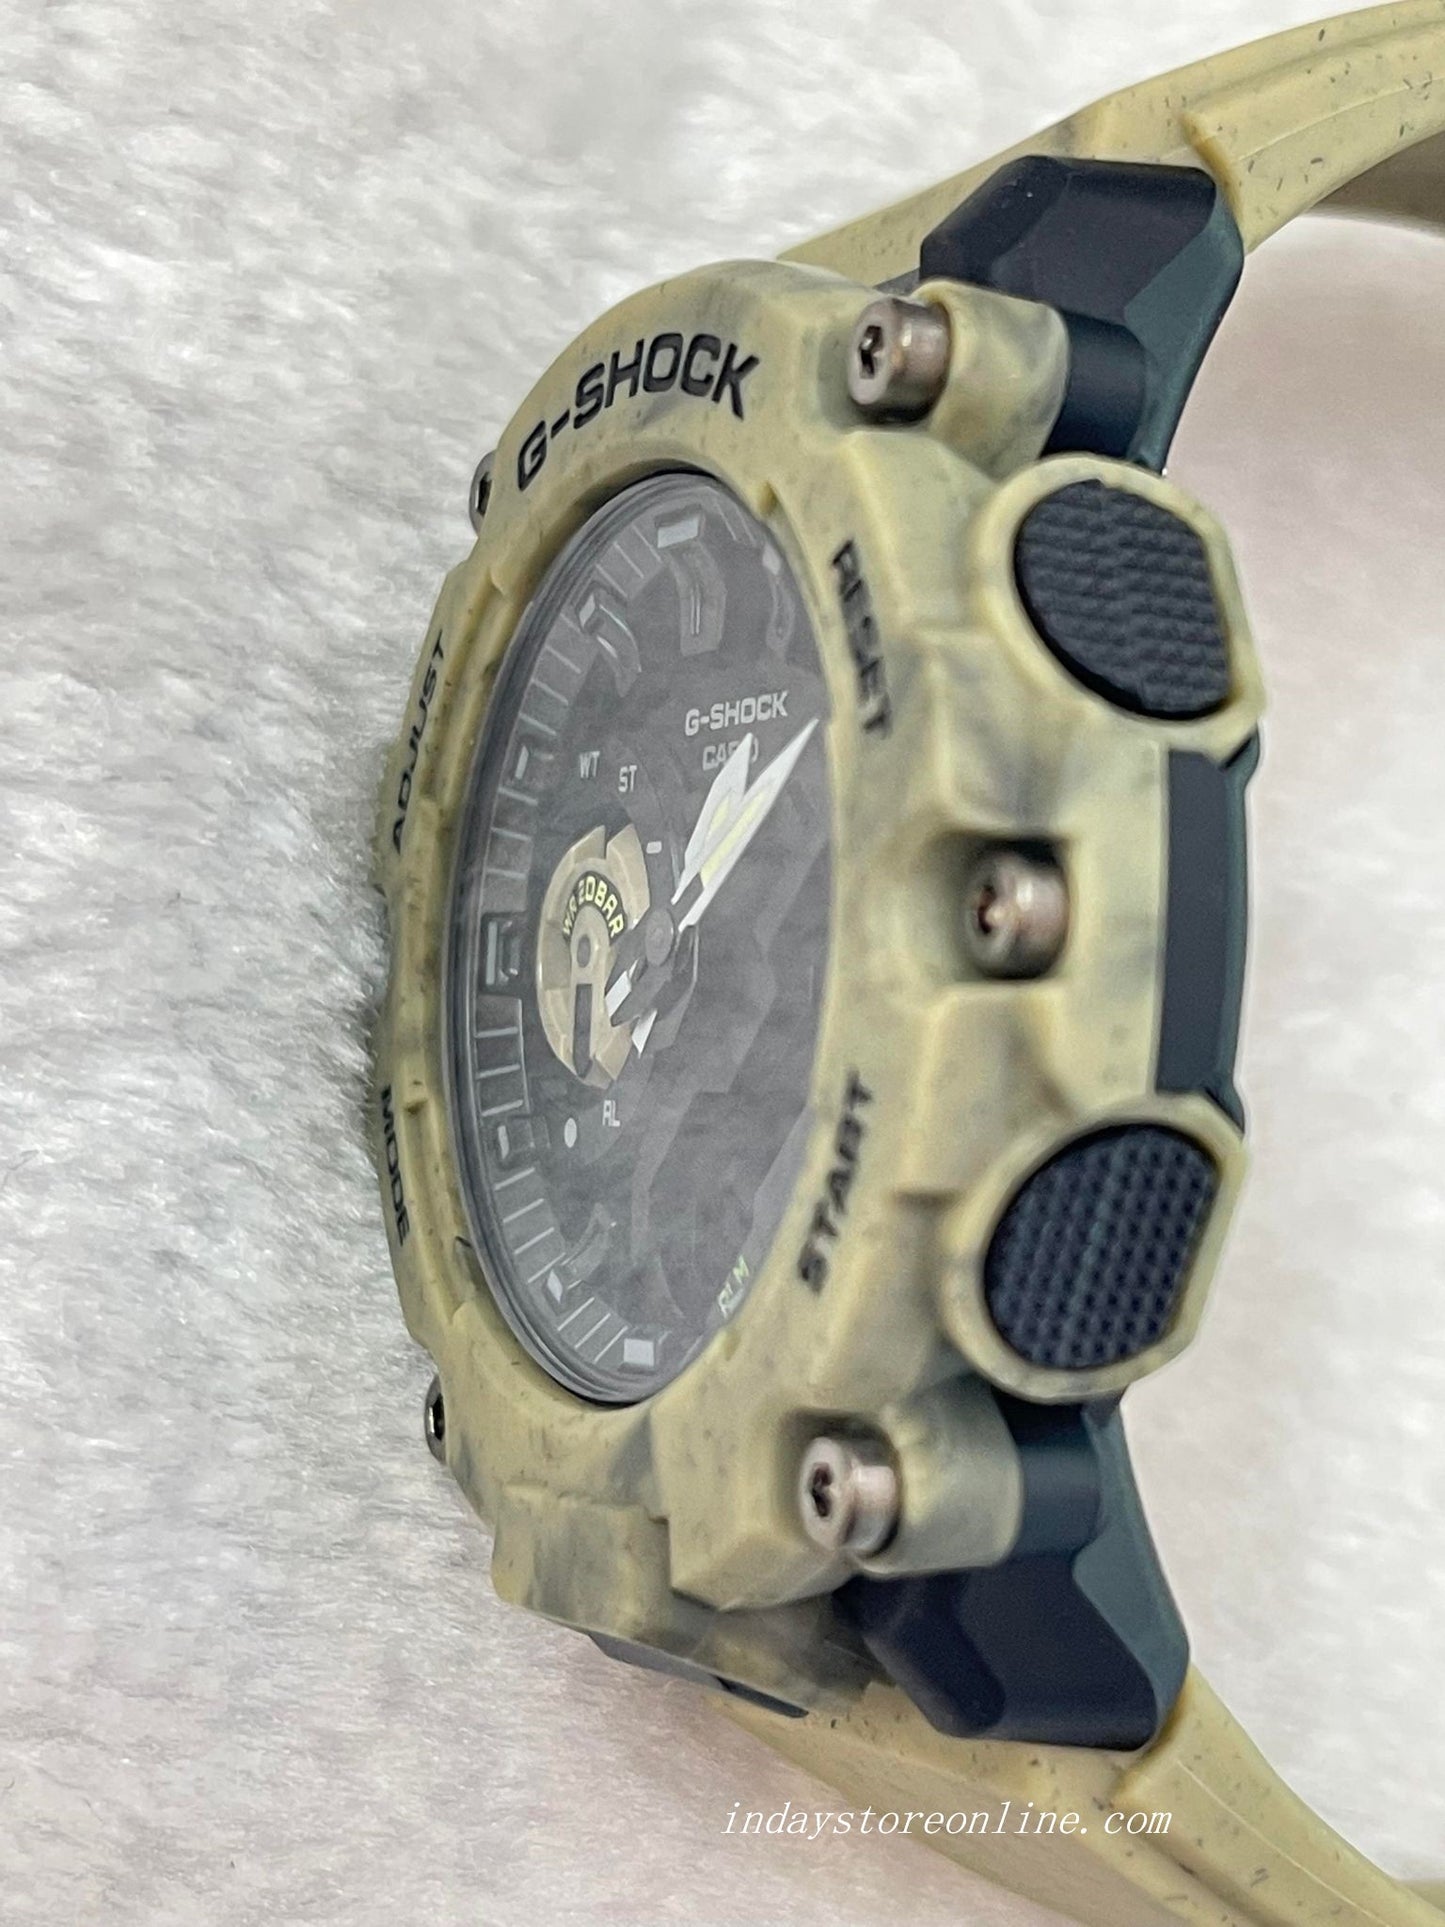 Casio G-Shock Men's Watch GA-2200SL-5A Analog-Digital GA-2200 Series Carbon Core Guard structure Earthy Color